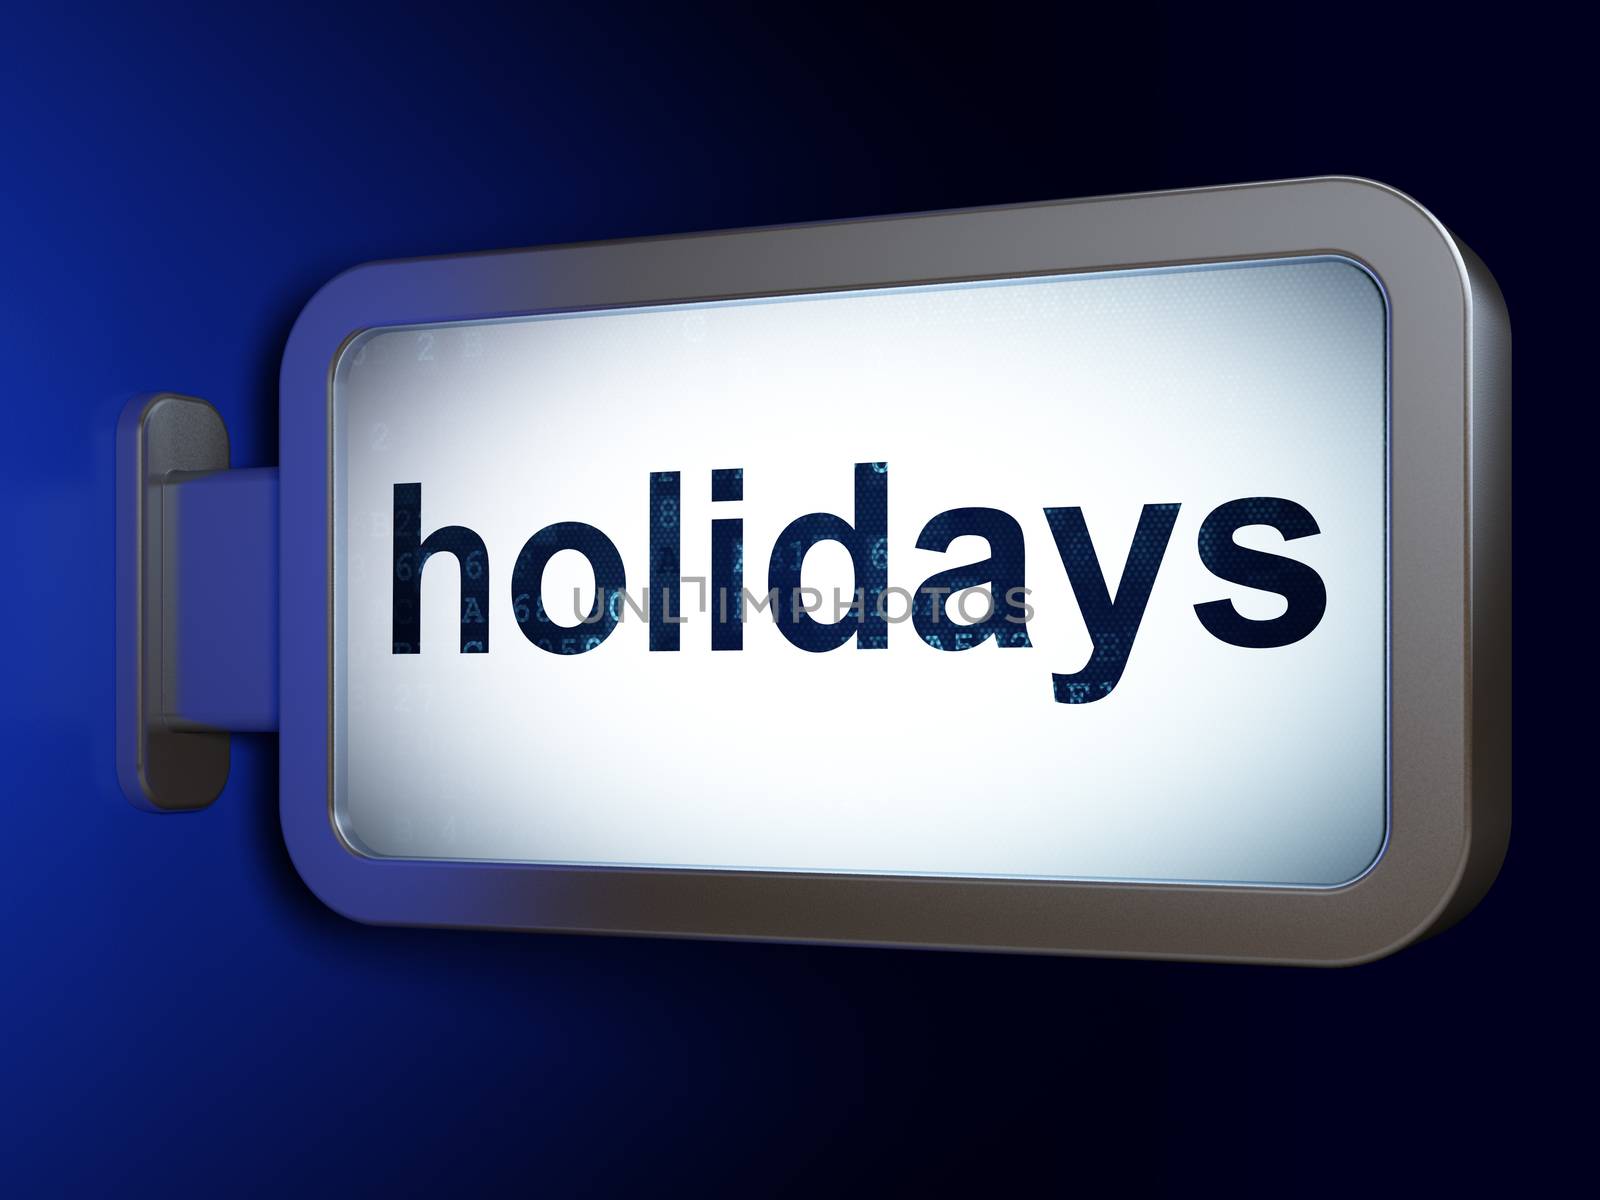 Holiday concept: Holidays on billboard background by maxkabakov